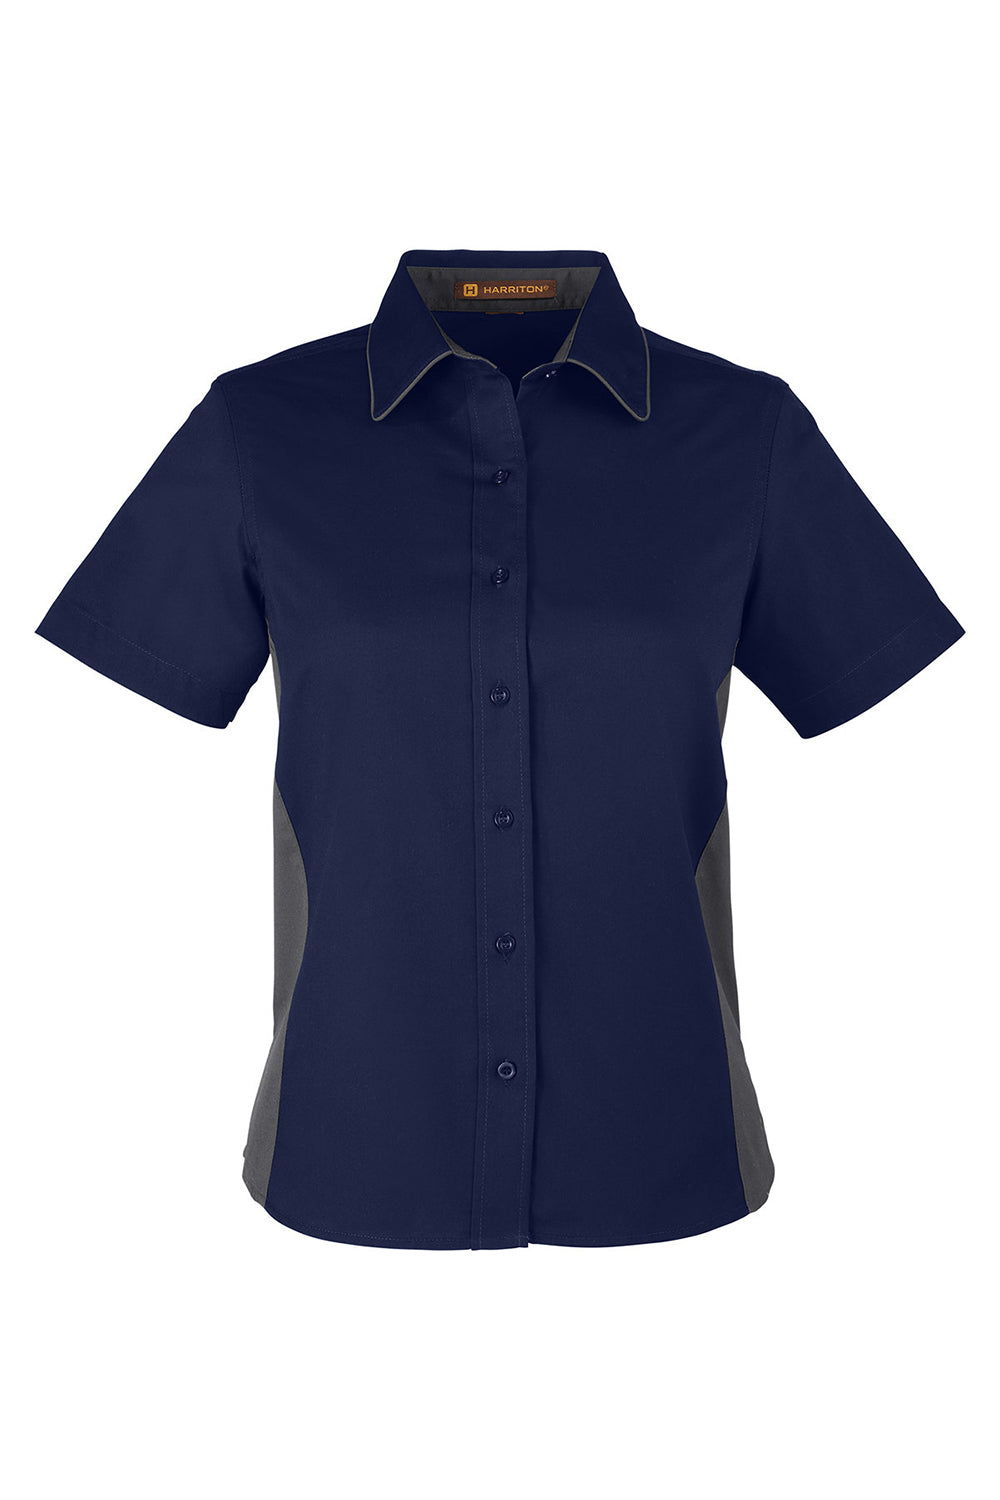 Harriton M586W Womens Flash Colorblock Short Sleeve Button Down Shirt Dark Navy Blue/Dark Charcoal Grey Flat Front